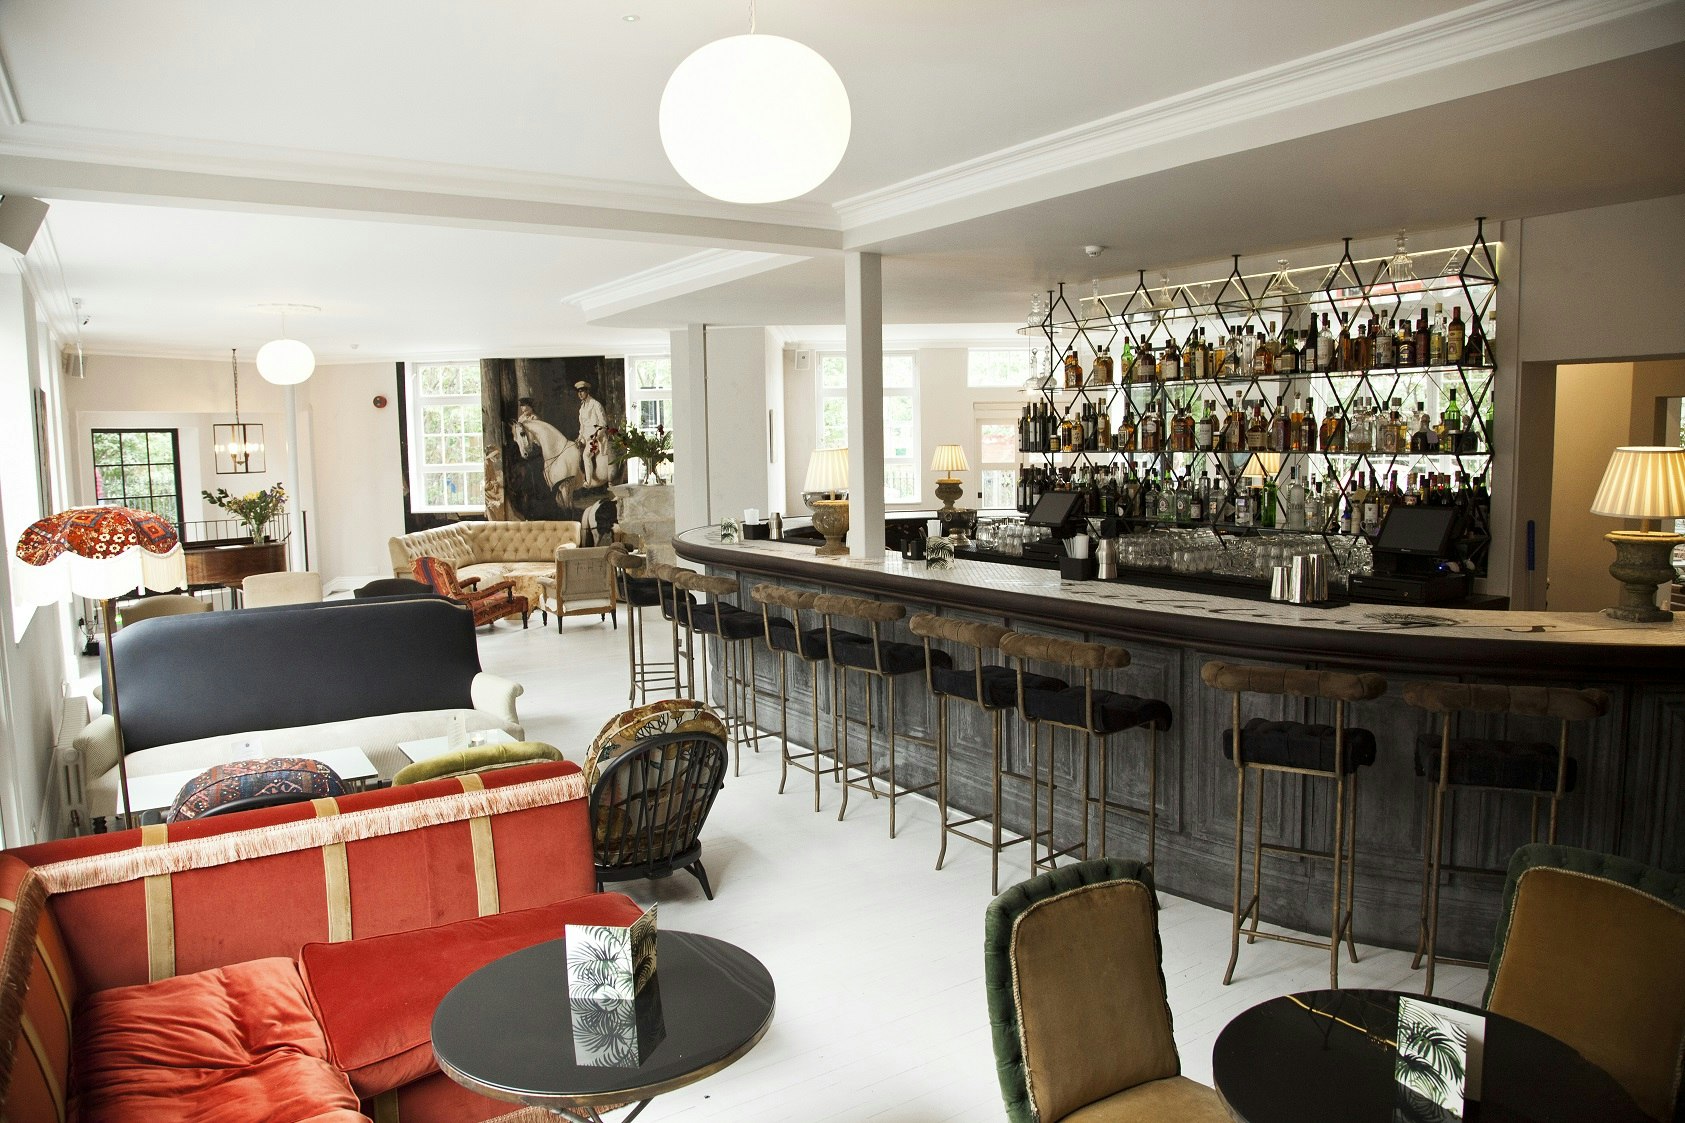 Bars Venues in London - Bourne & Hollingsworth Buildings